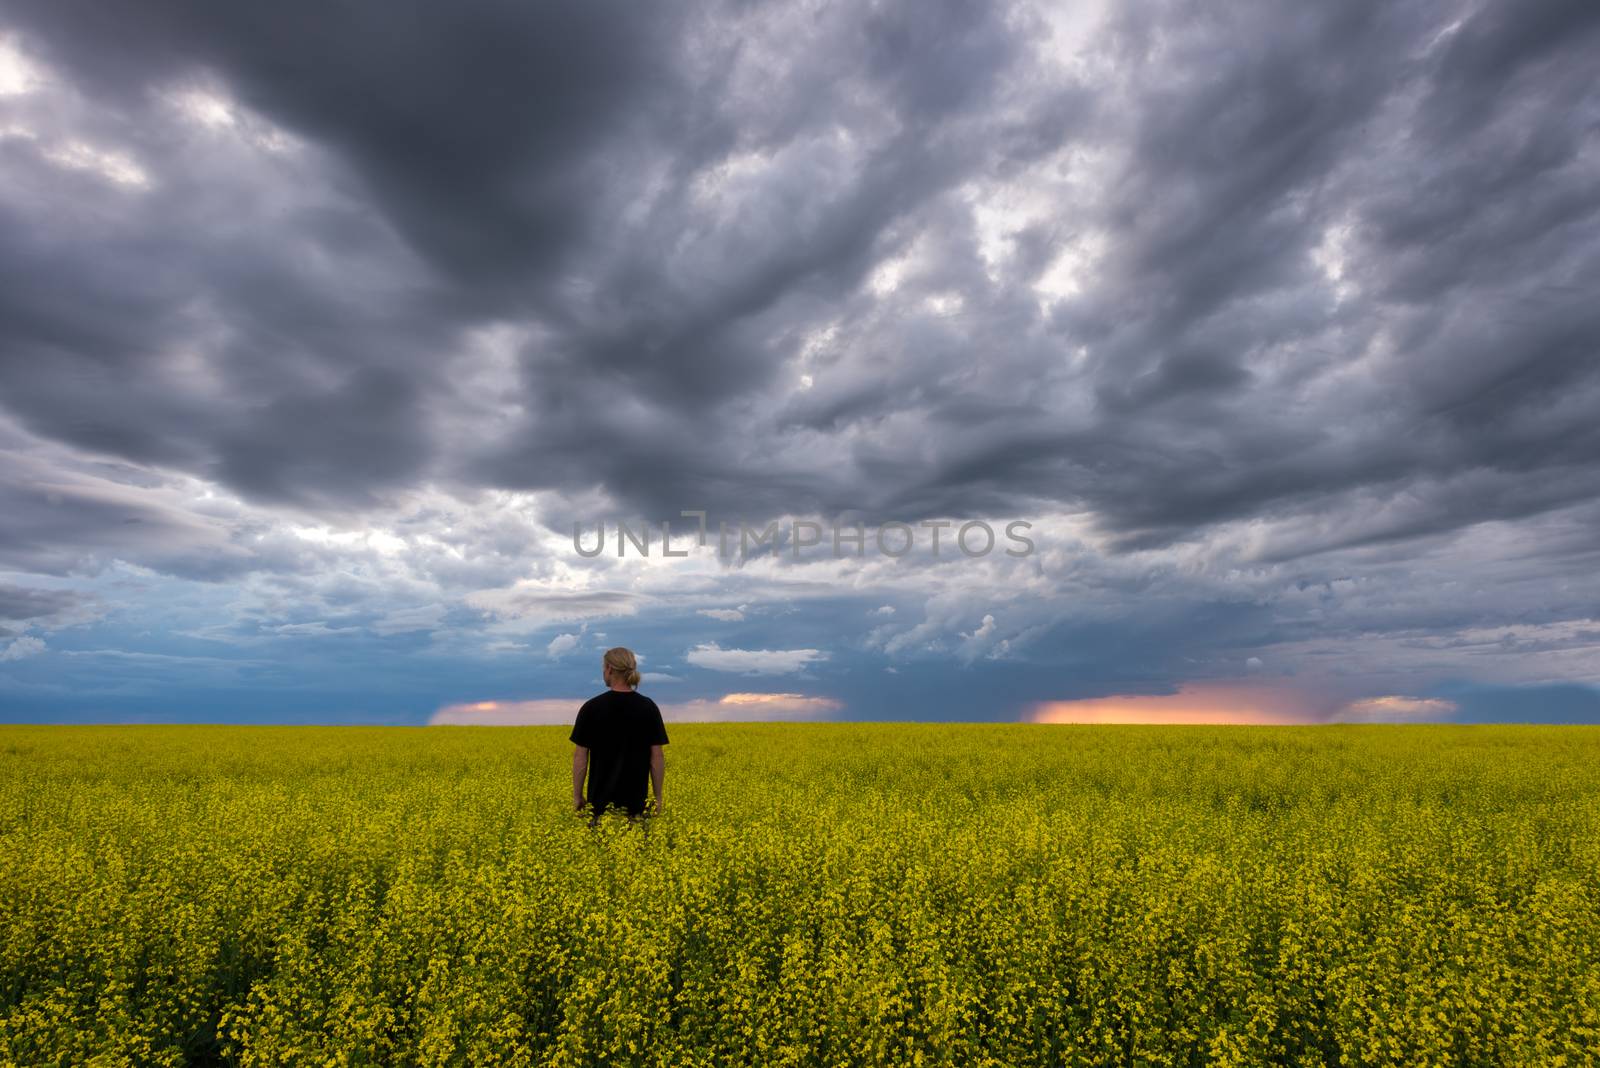 Lone guy standing in wide open farm field during storm by TSLPhoto